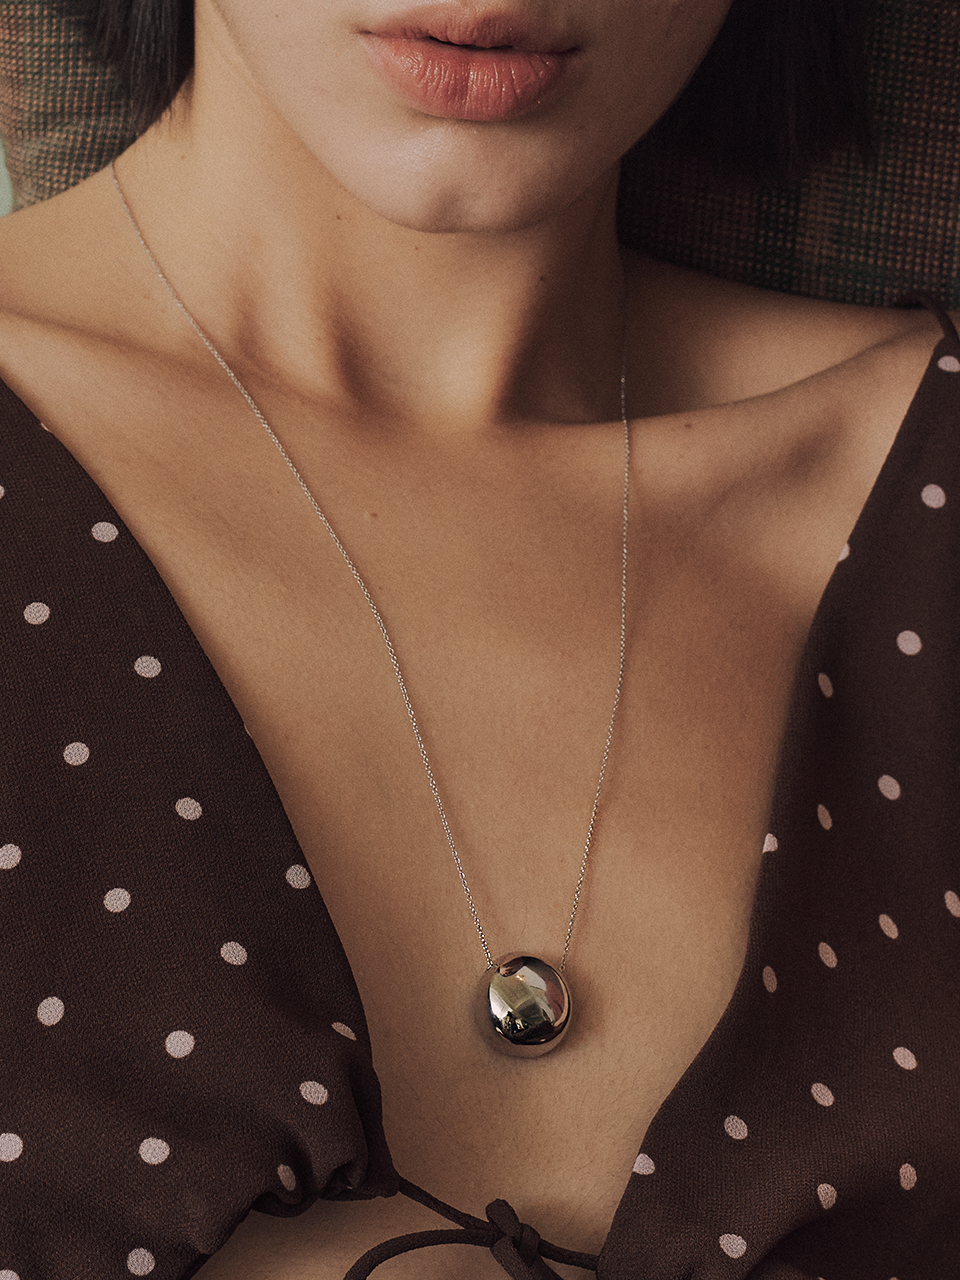 pebble pendant Necklace [Silver] - DENU